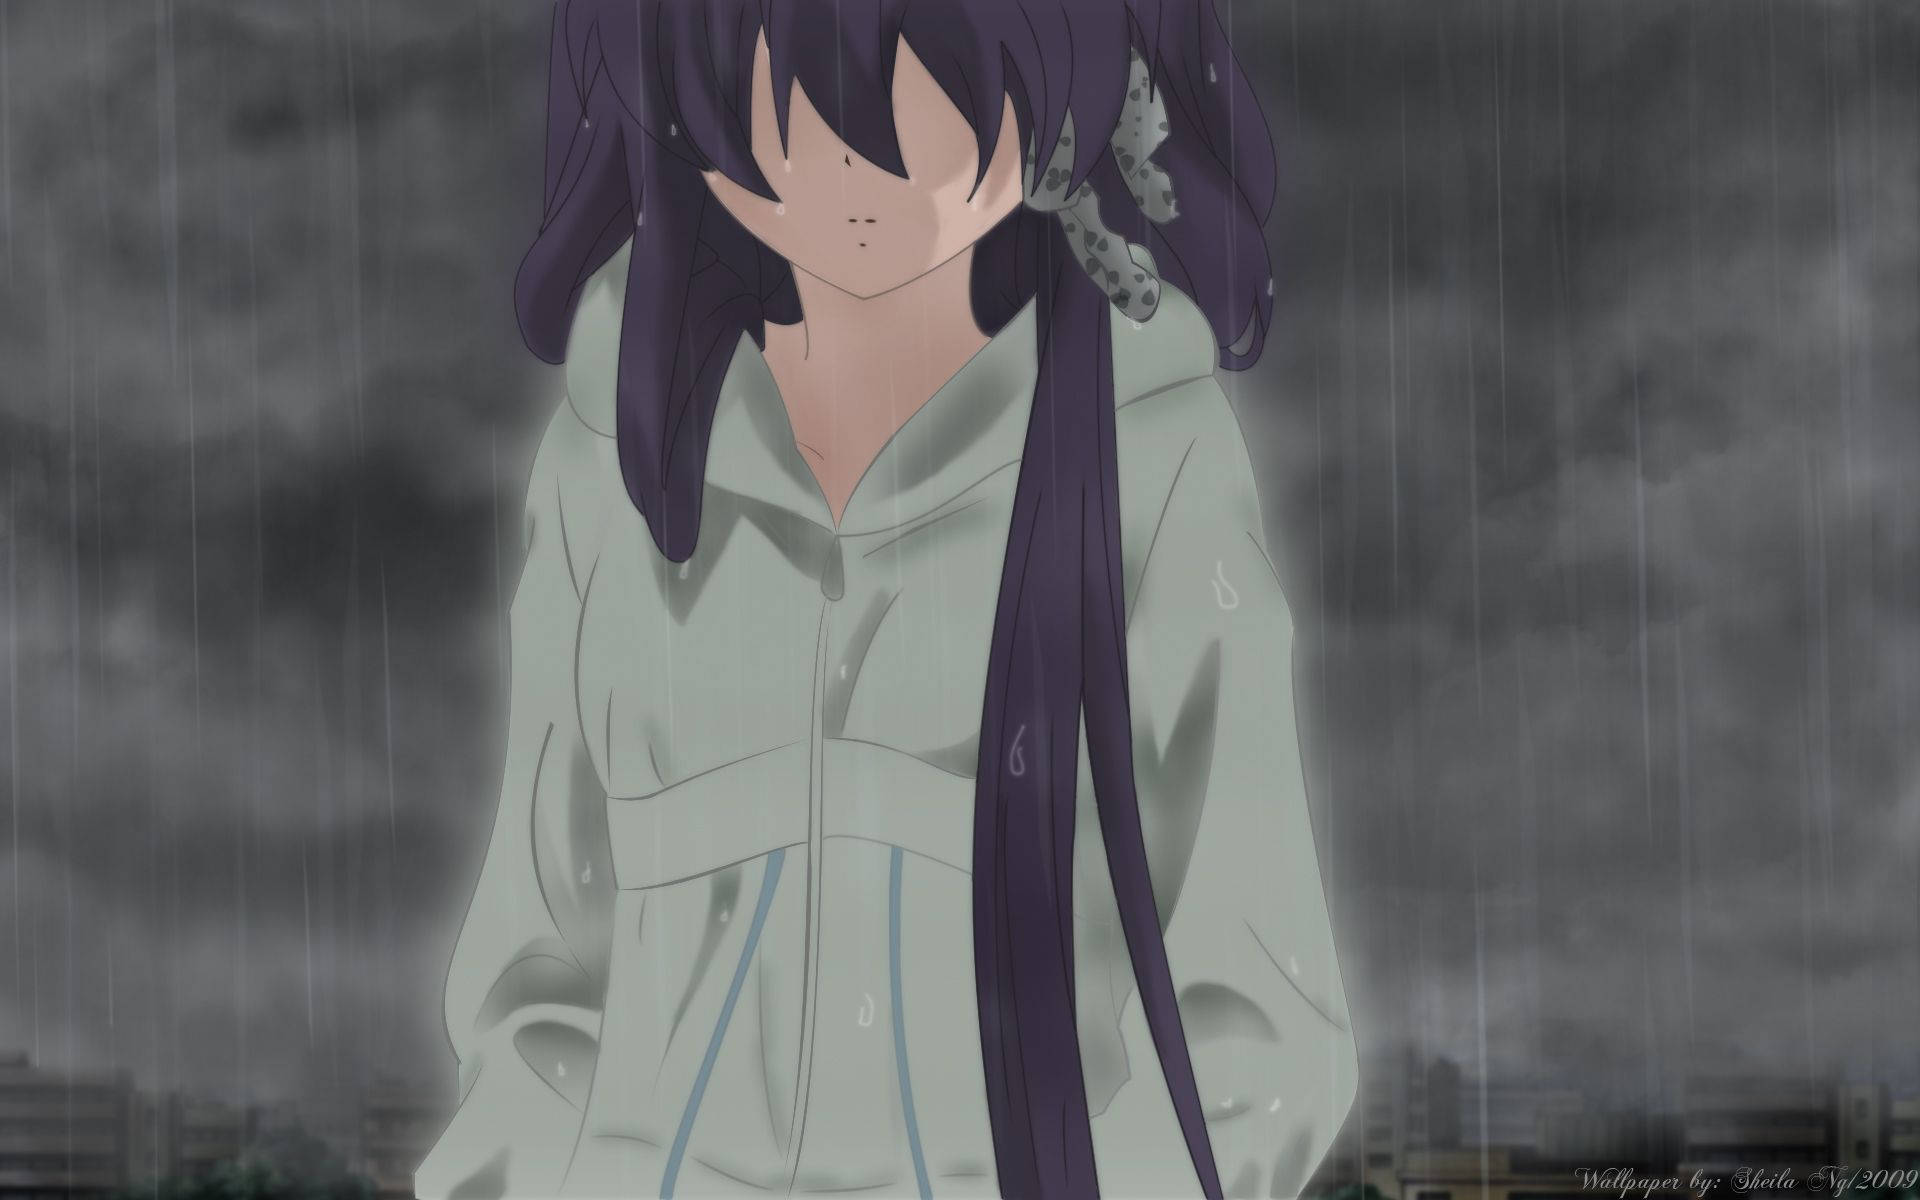 An anime girl overwhelmed by sadness Wallpaper